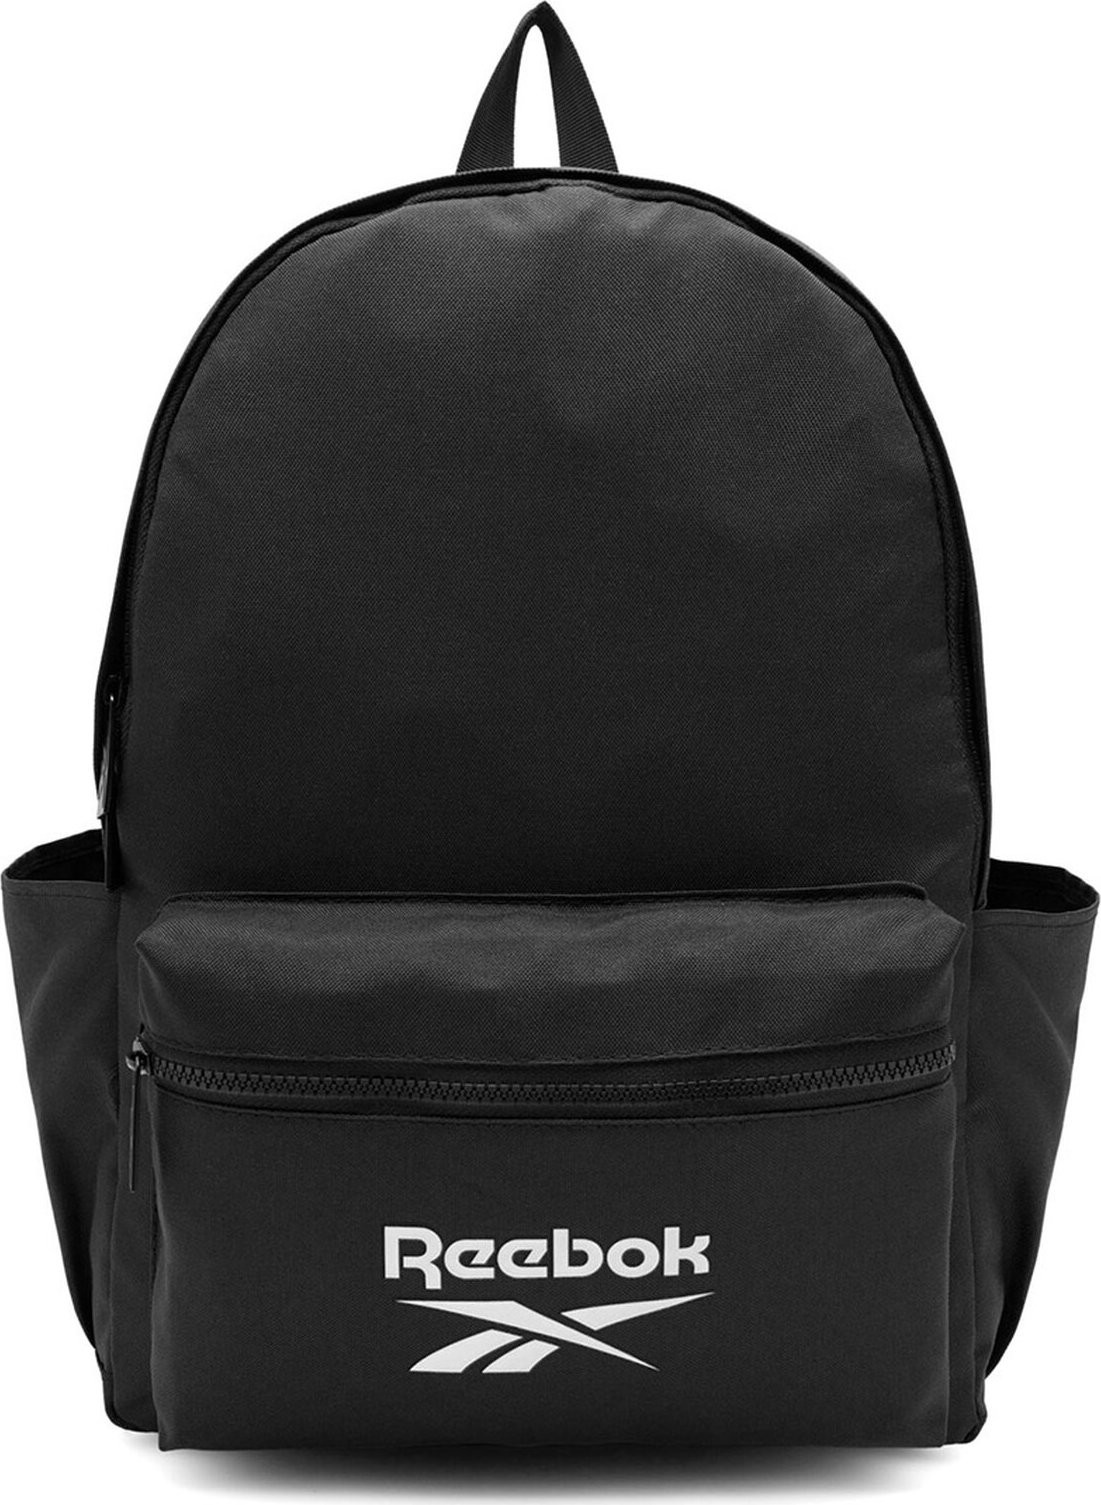 Batoh Reebok RBK-001-CCC-05 Black